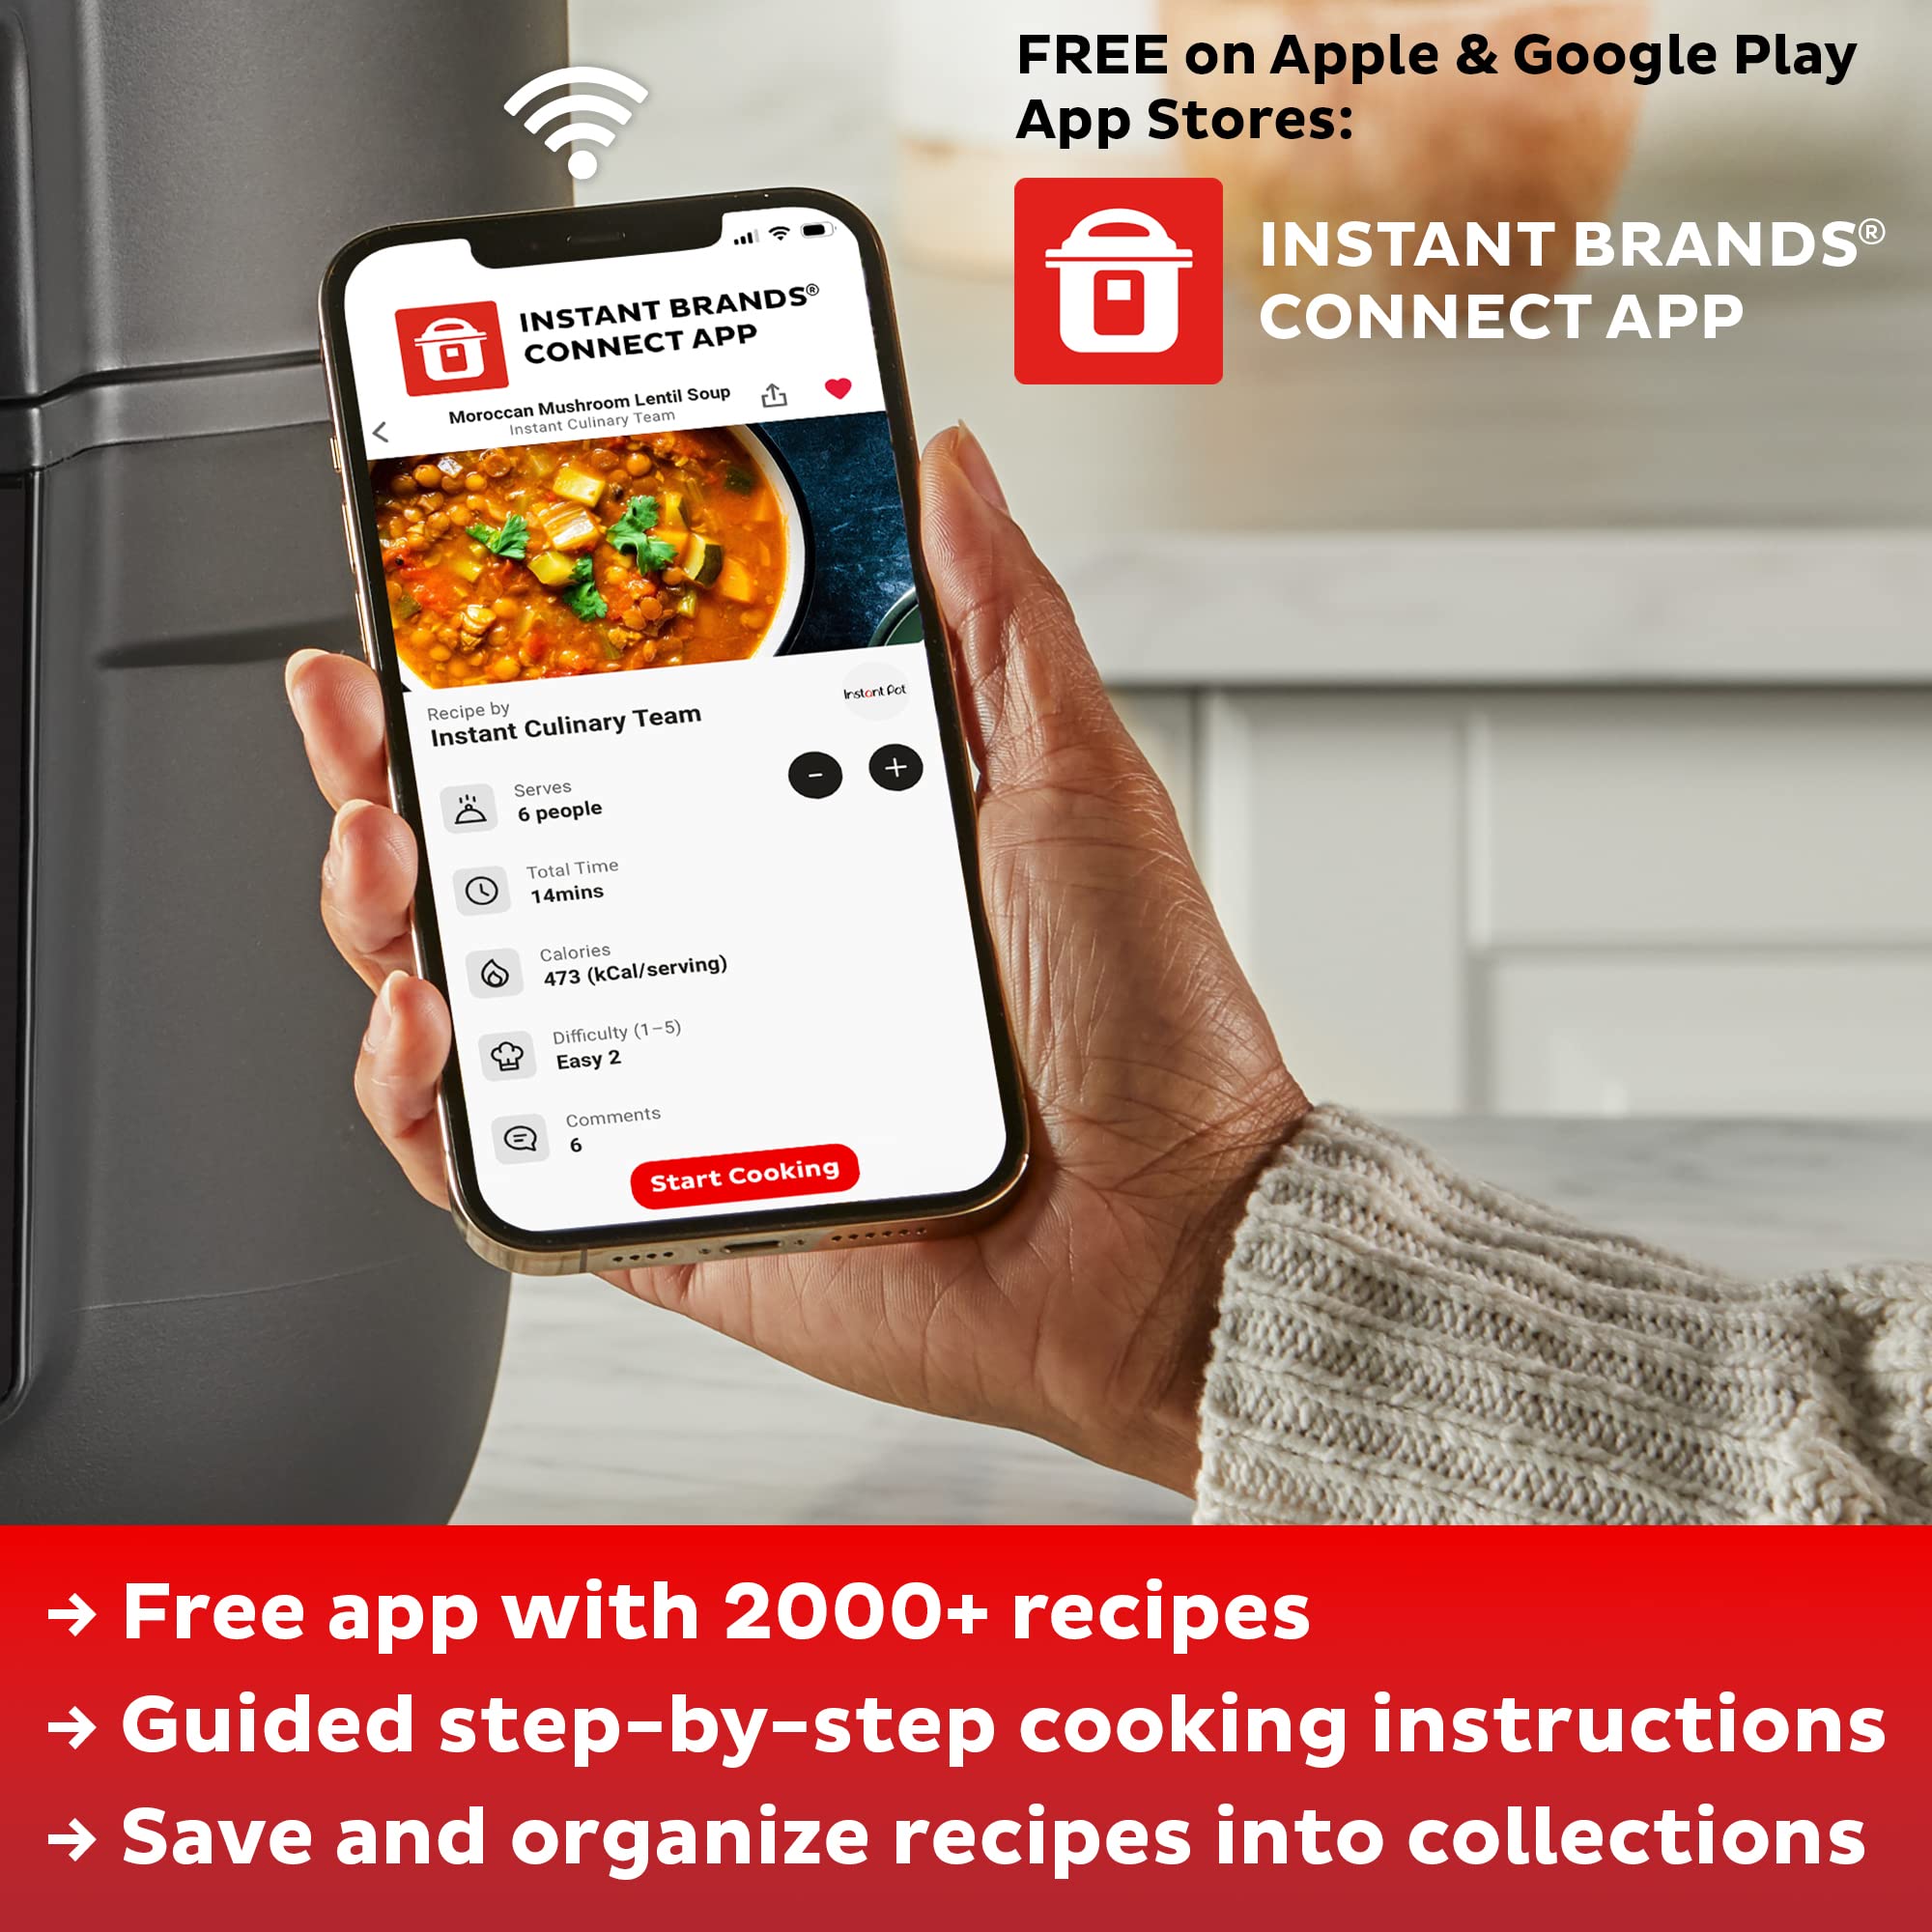 Instant Pot Pro 10-in-1 Pressure Cooker, Slow Cooker, Rice/Grain Cooker, Steamer, Sauté, Sous Vide, Yogurt Maker, Sterilizer, and Warmer, Includes App With Over 800 Recipes, Black, 8 Quart